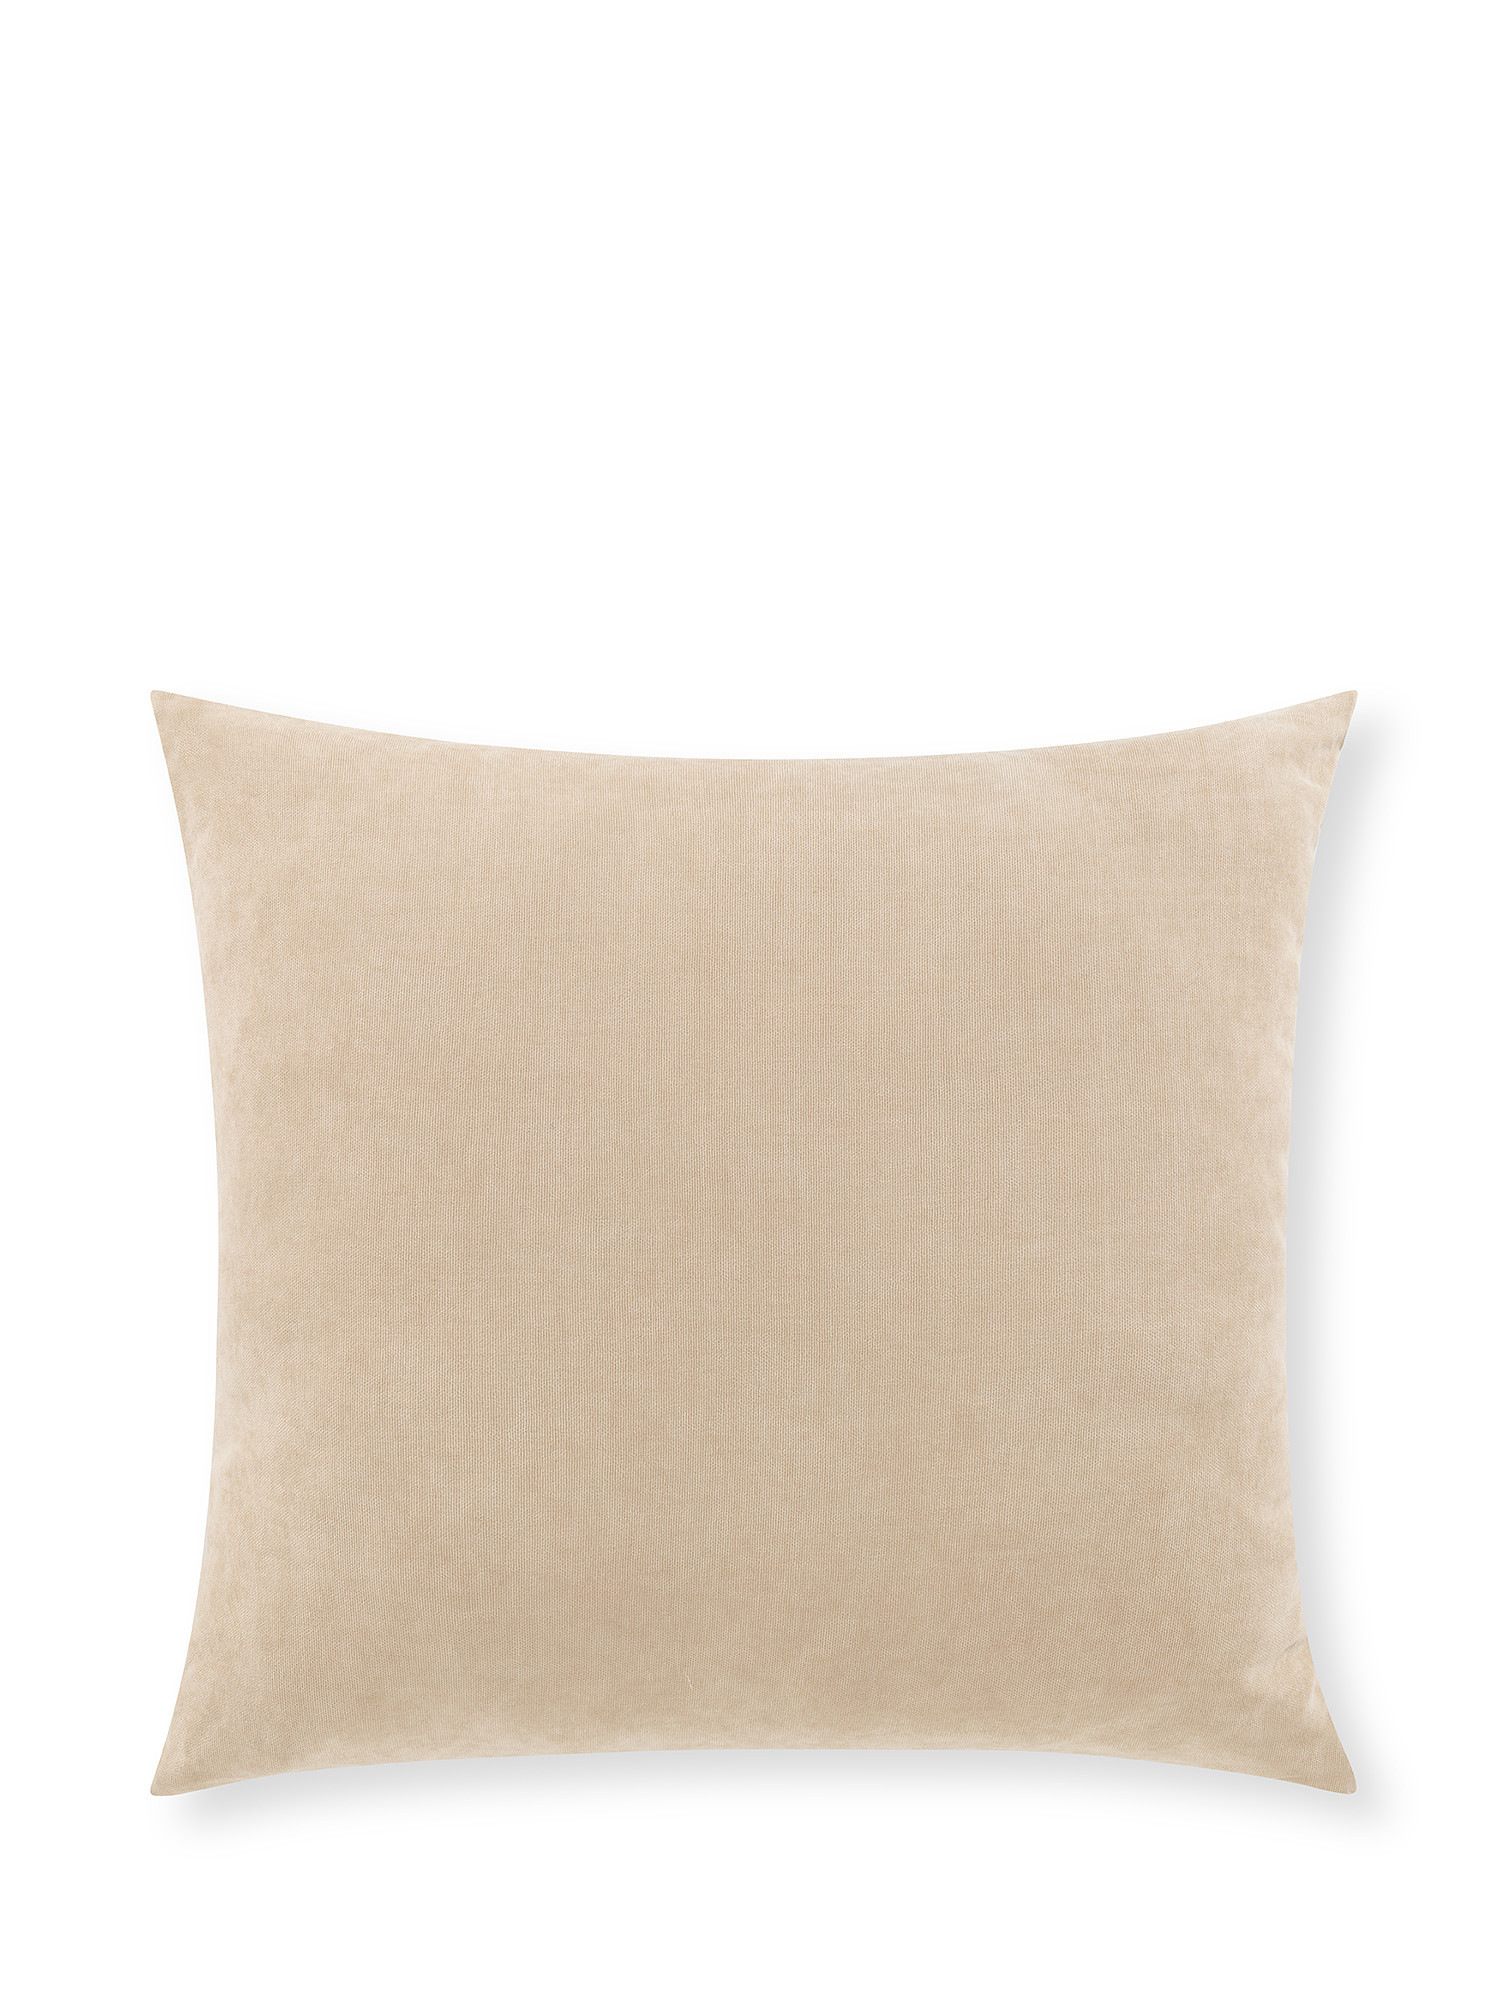 Jacquard cushion with geometric motif 50x50cm, Beige, large image number 1